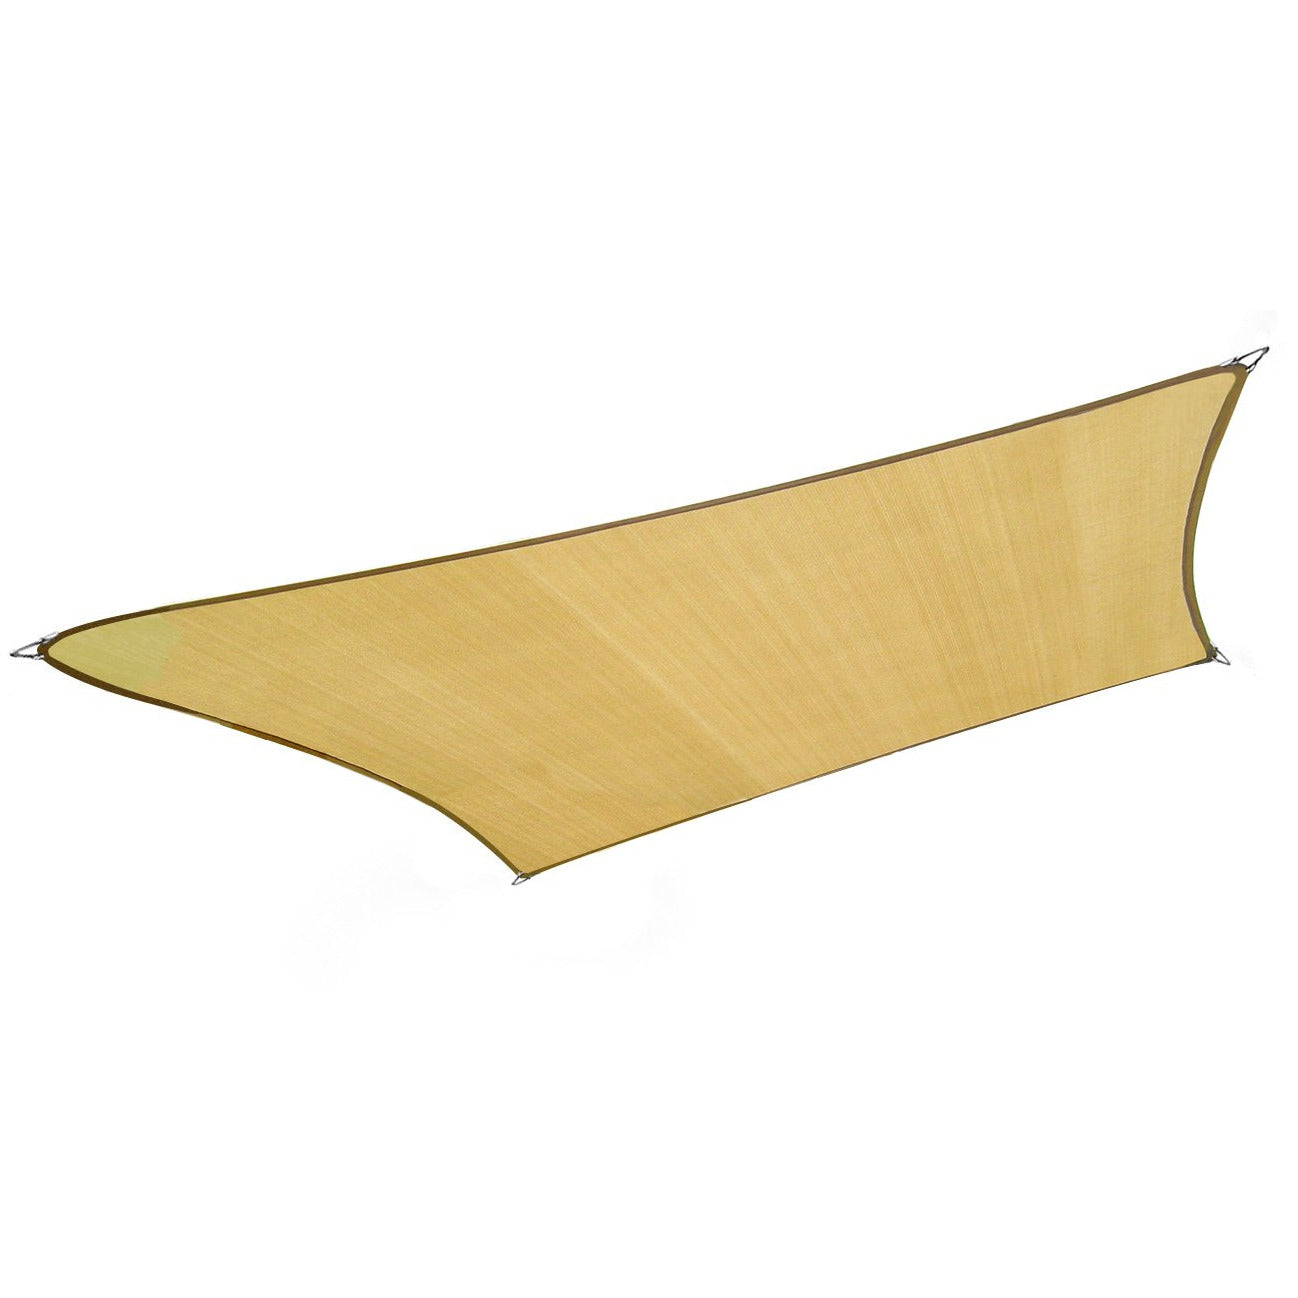 Wallaroo Rectangular Shade Sail Sand: 3m x 4m